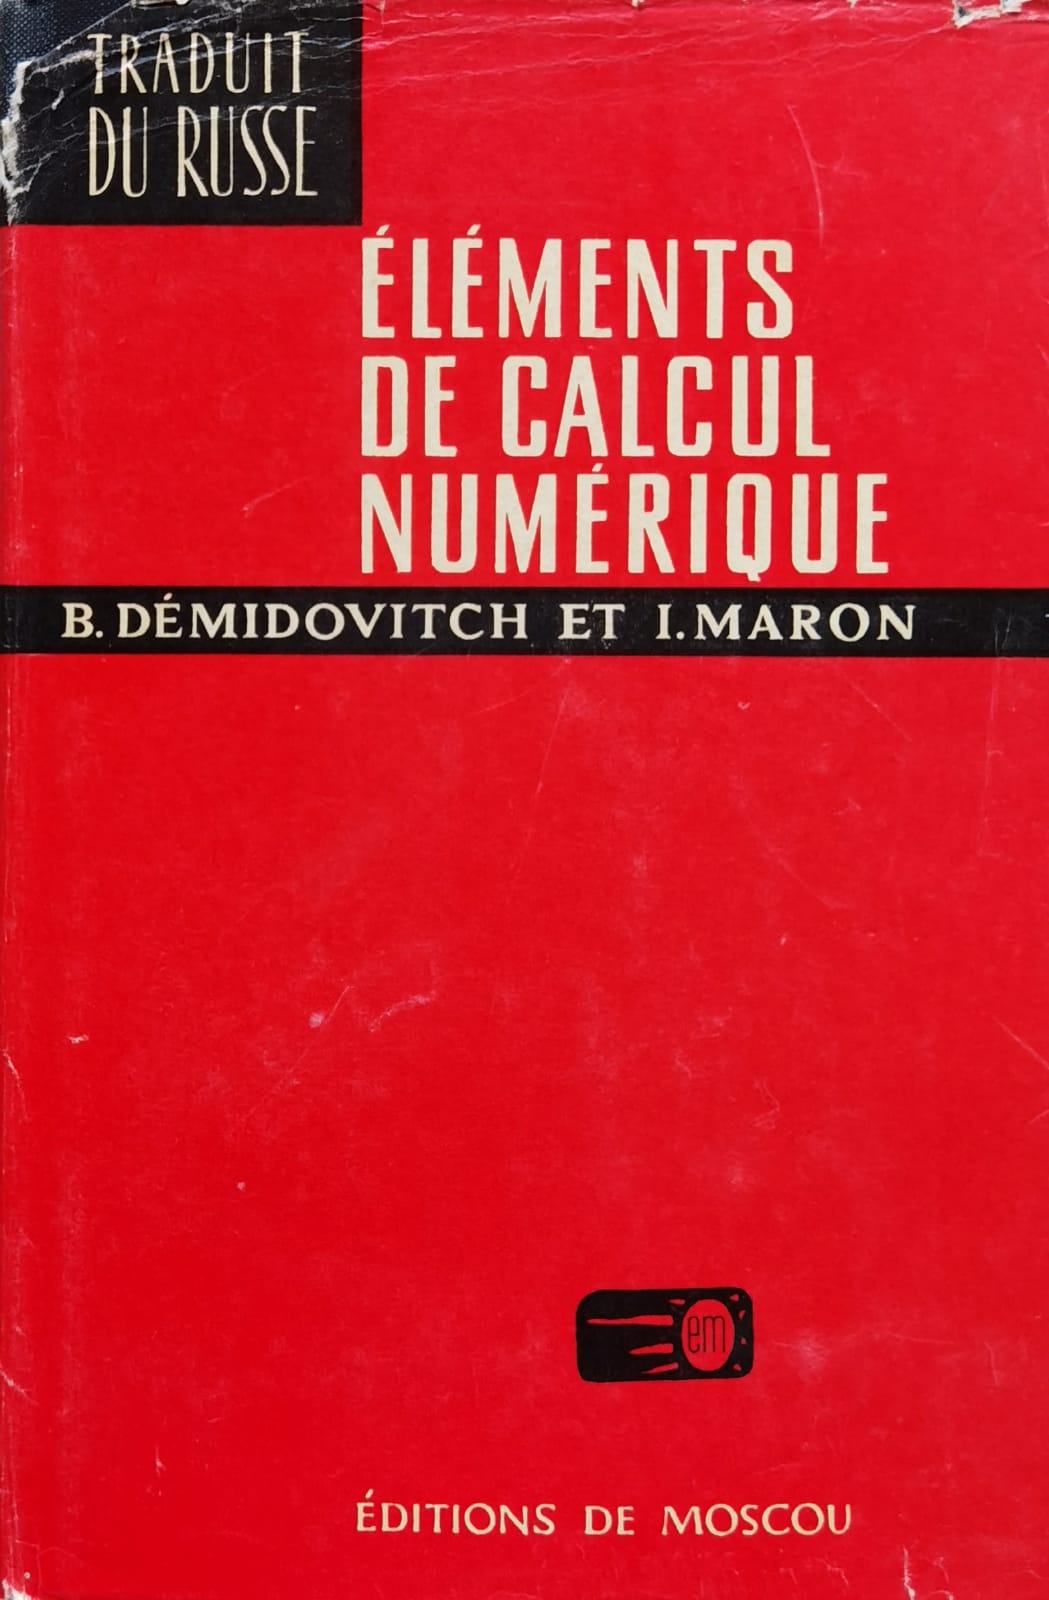 elements de calcul numerique                                                                         b. demidovitch i. maron                                                                             